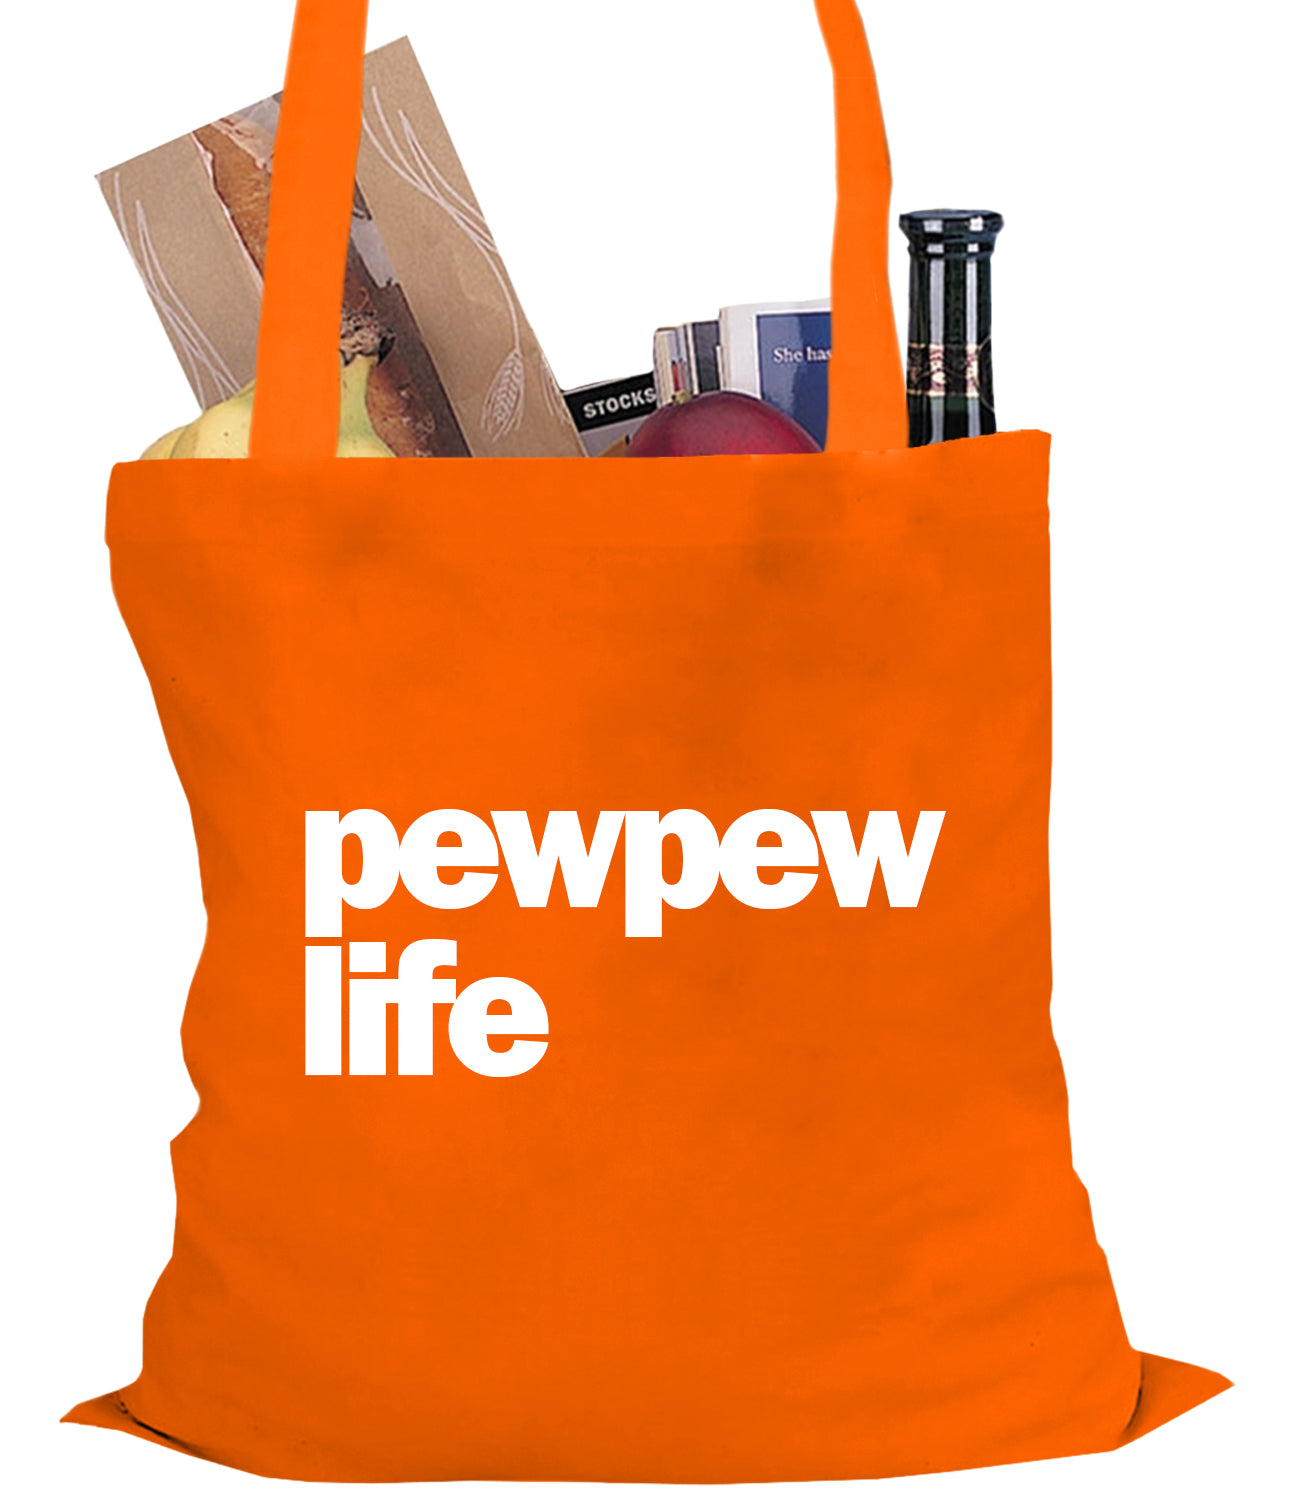 The Pew Pew Life Tote Bag